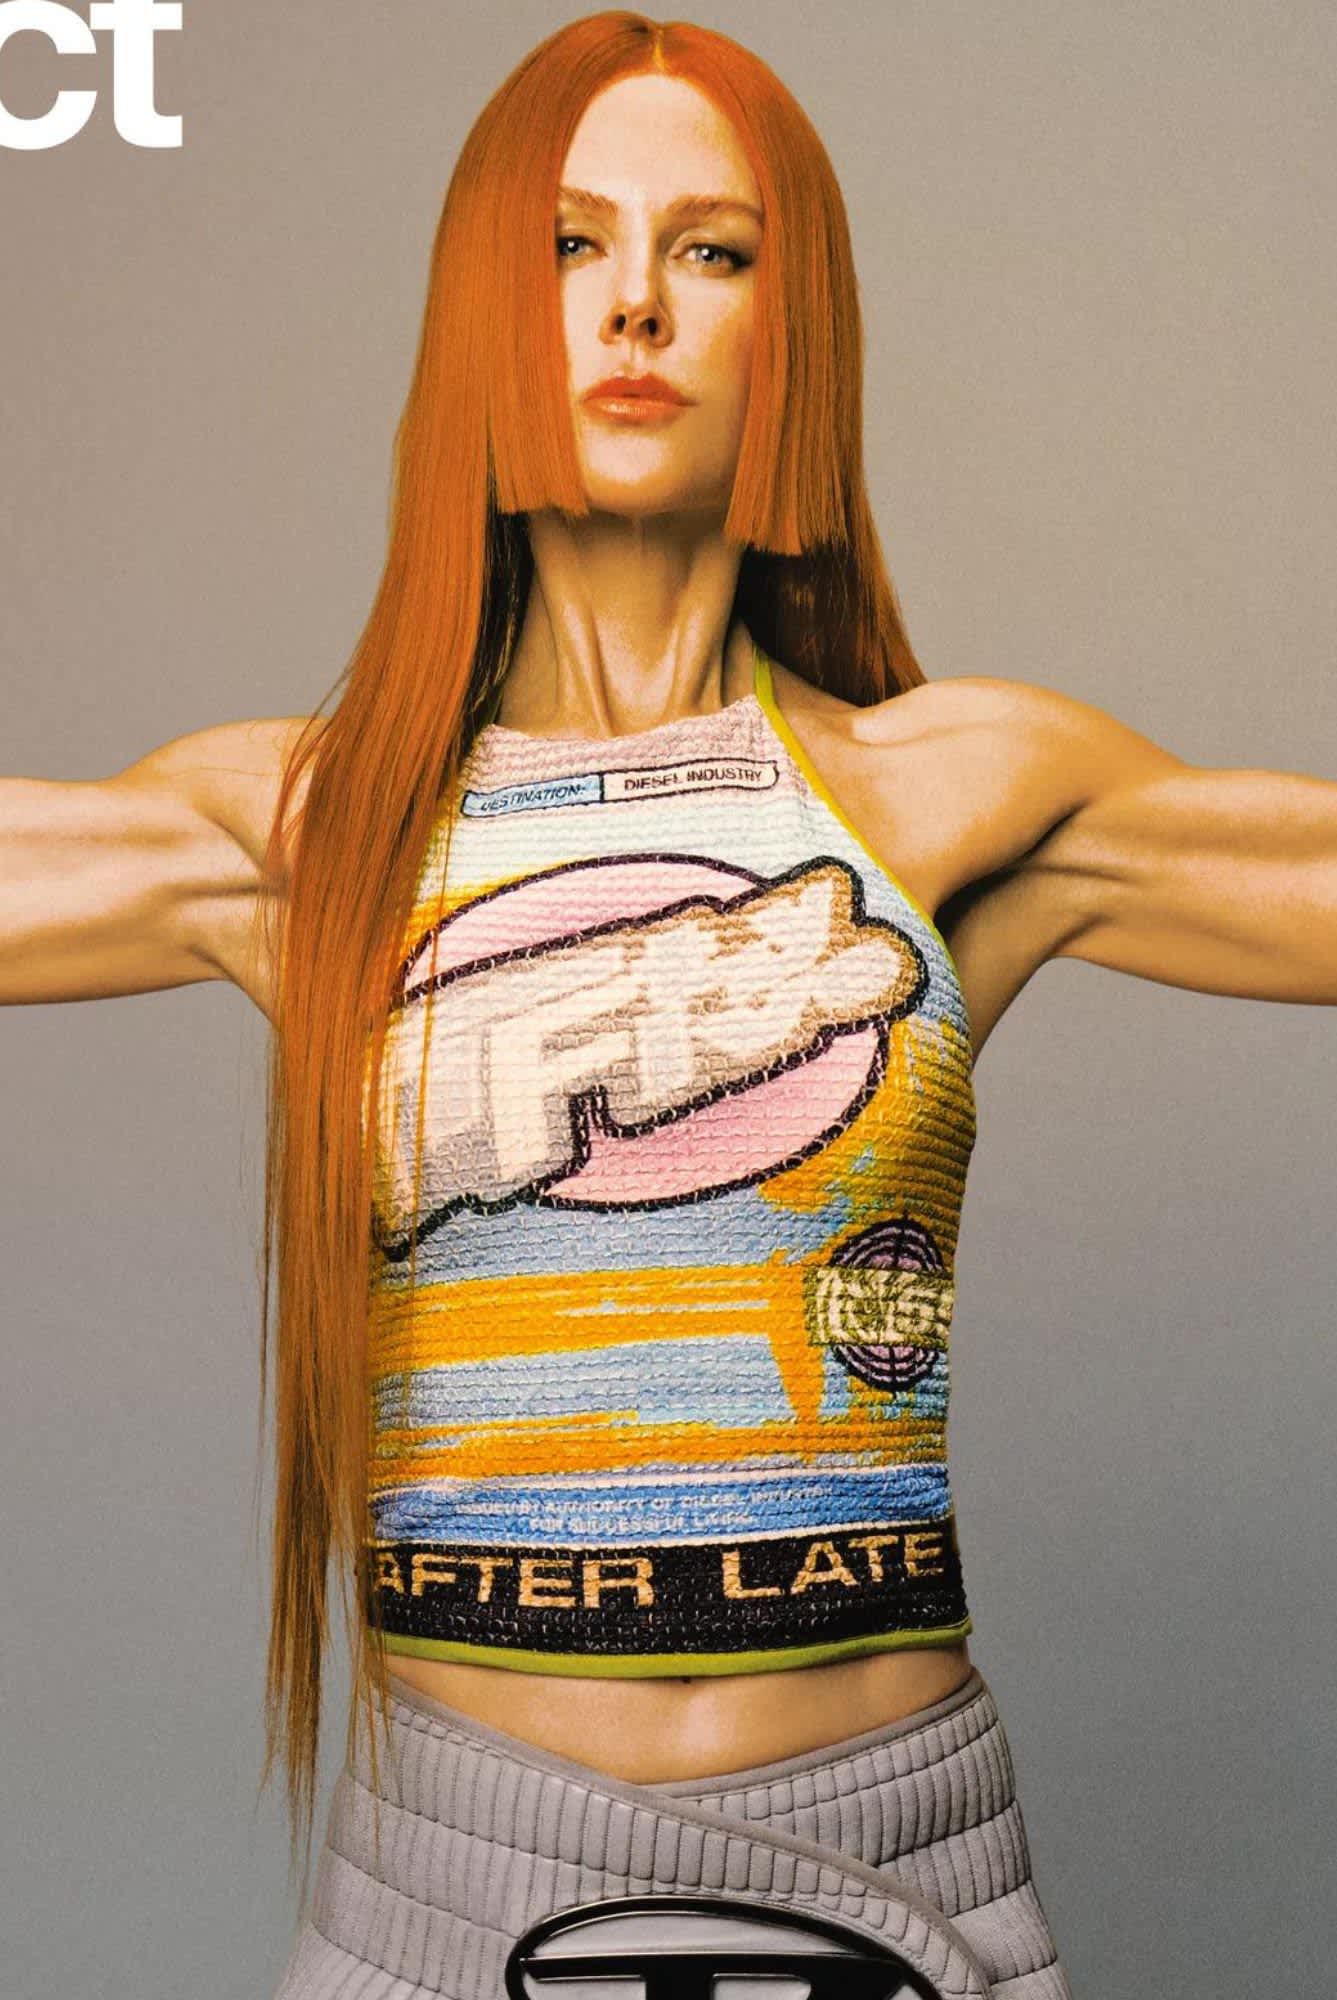 Nicole Kidman's Jellyfish Haircut on Cover of Perfect